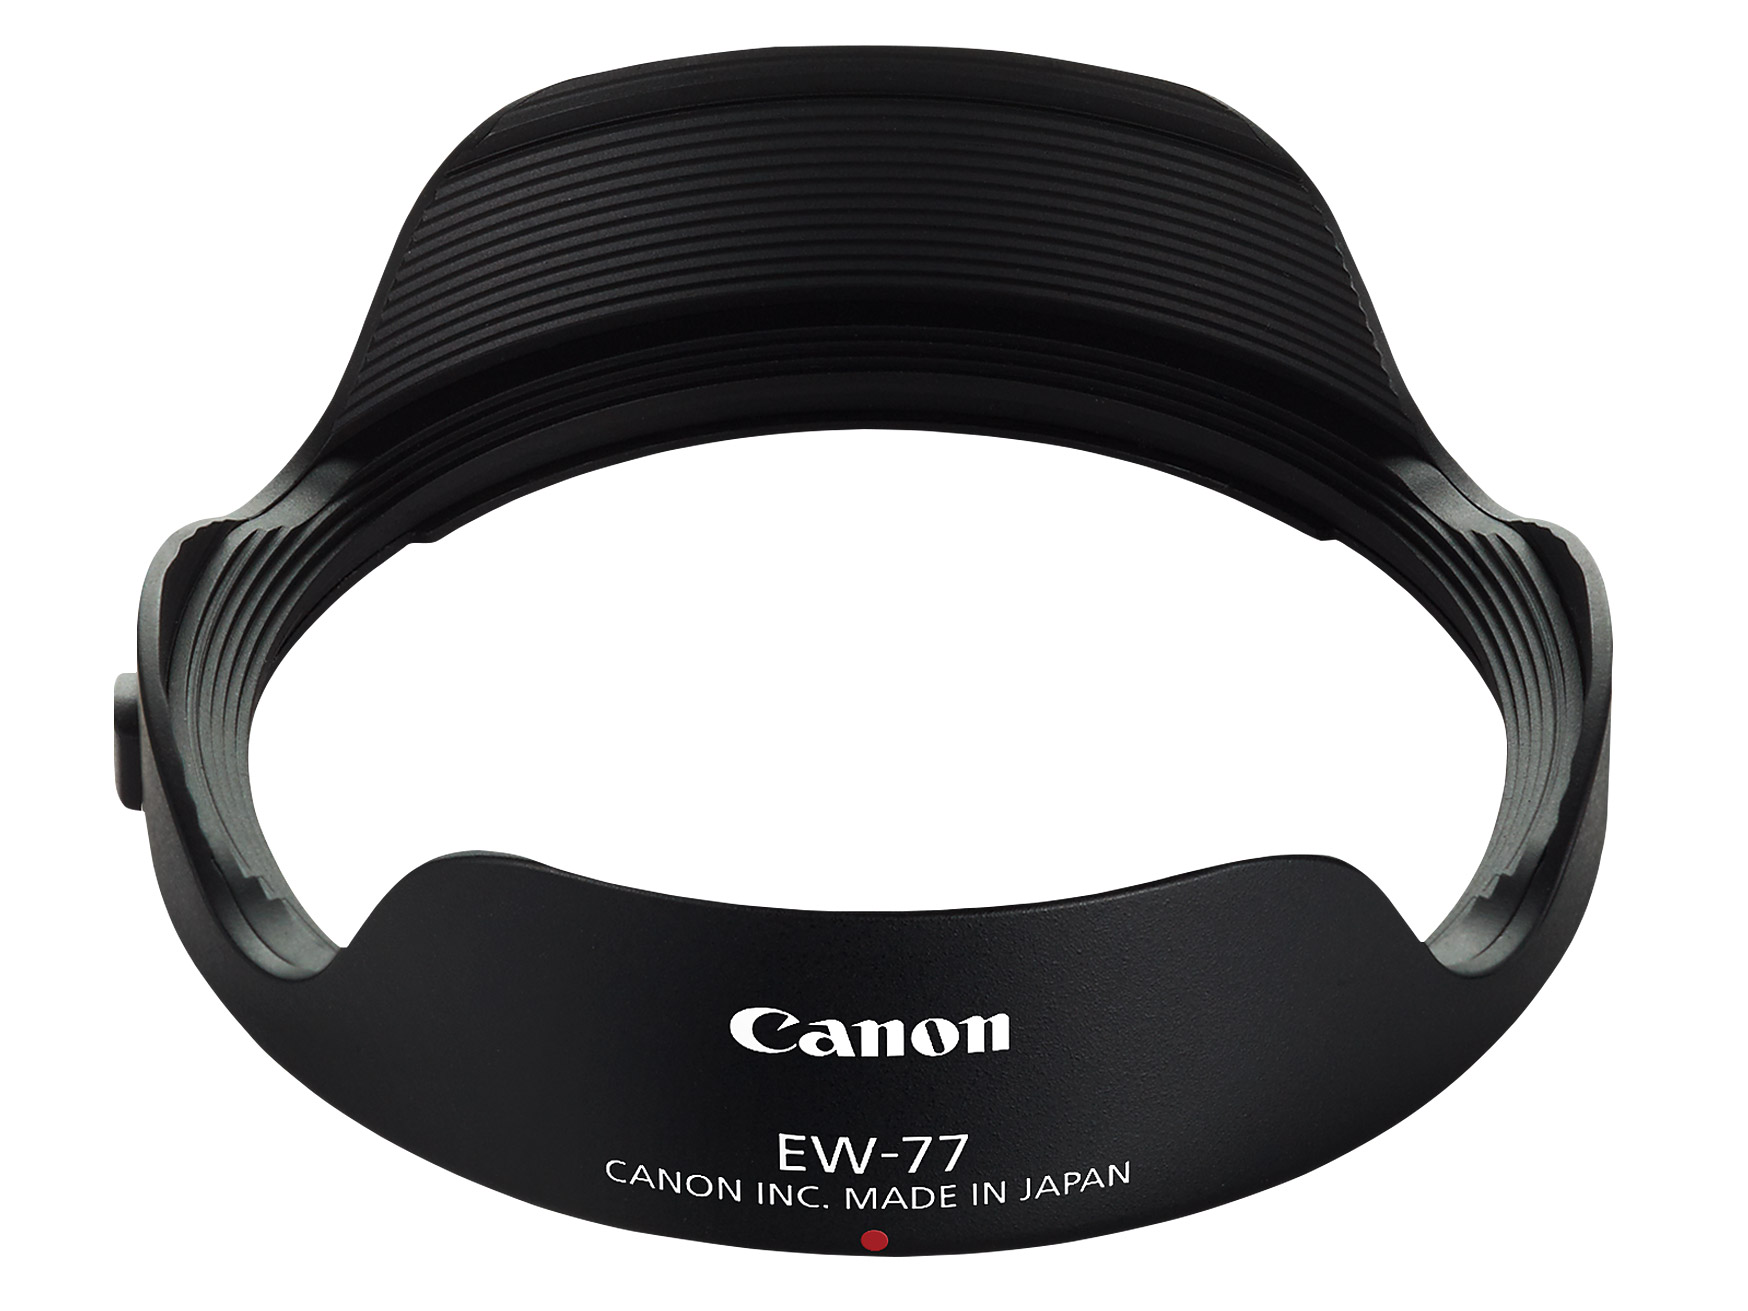 Canon EF 8-15mm f/4 L USM Fisheye